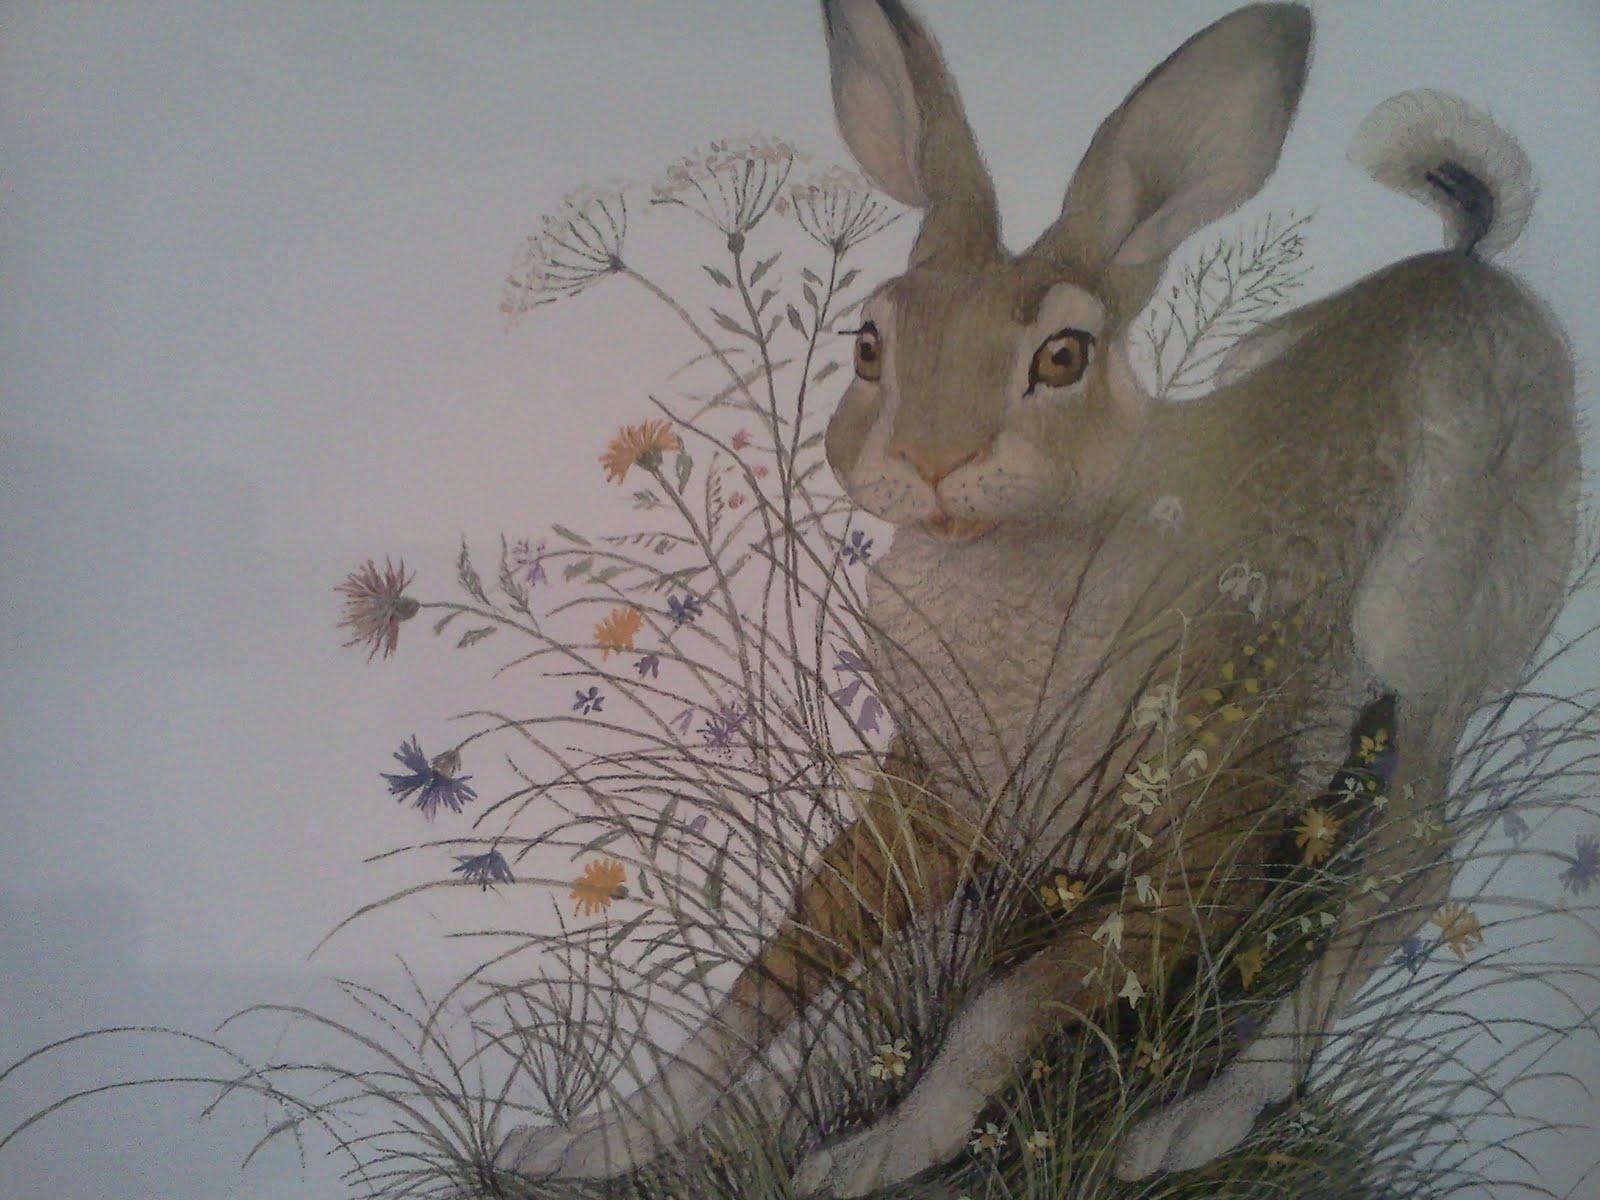 The Artful Deposit: The Velveteen Rabbit, illustrated